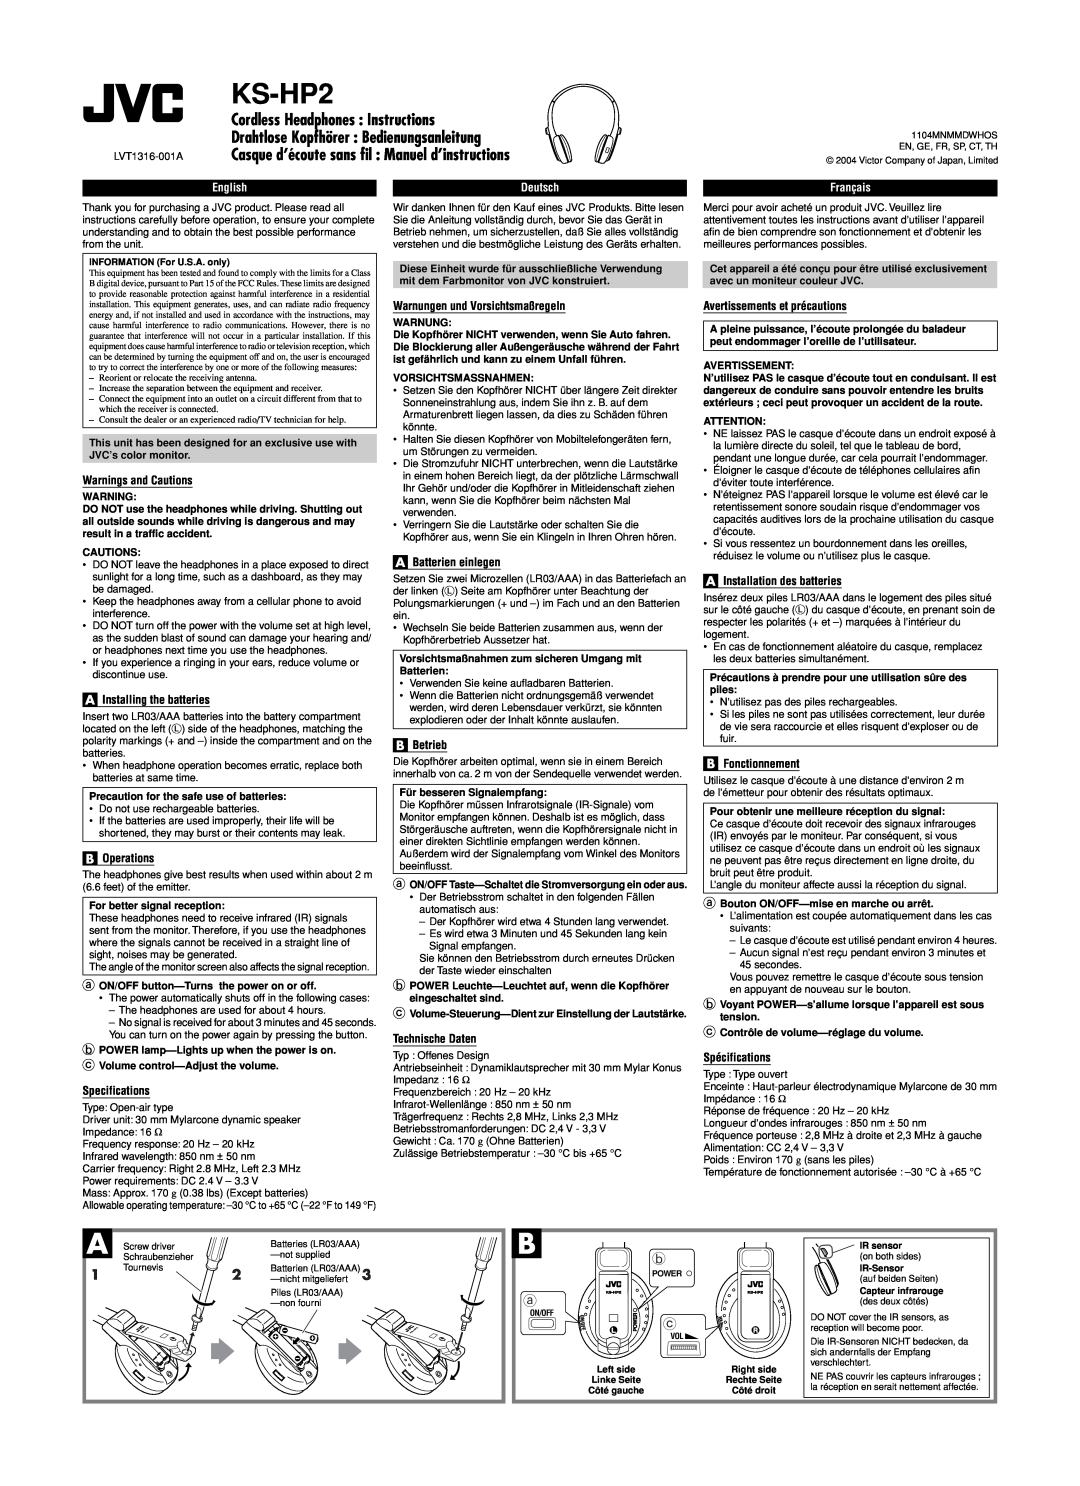 JVC KS-HP2 specifications Cordless Headphones Instructions, Drahtlose Kopfhörer Bedienungsanleitung, English, Deutsch 